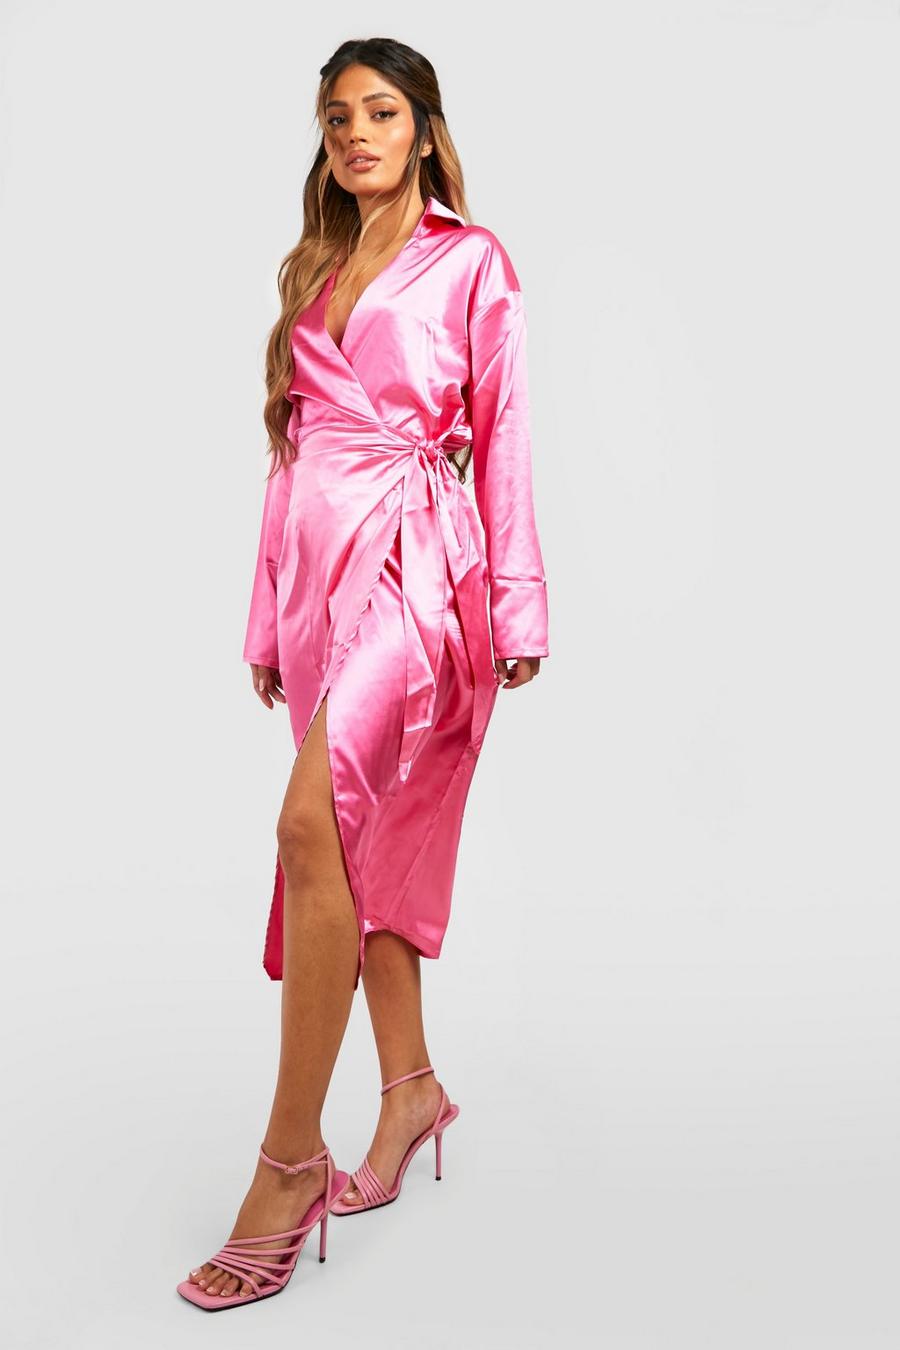 Hot pink שמלת חולצה מסאטן בגזרת מעטפת ובאורך מידי